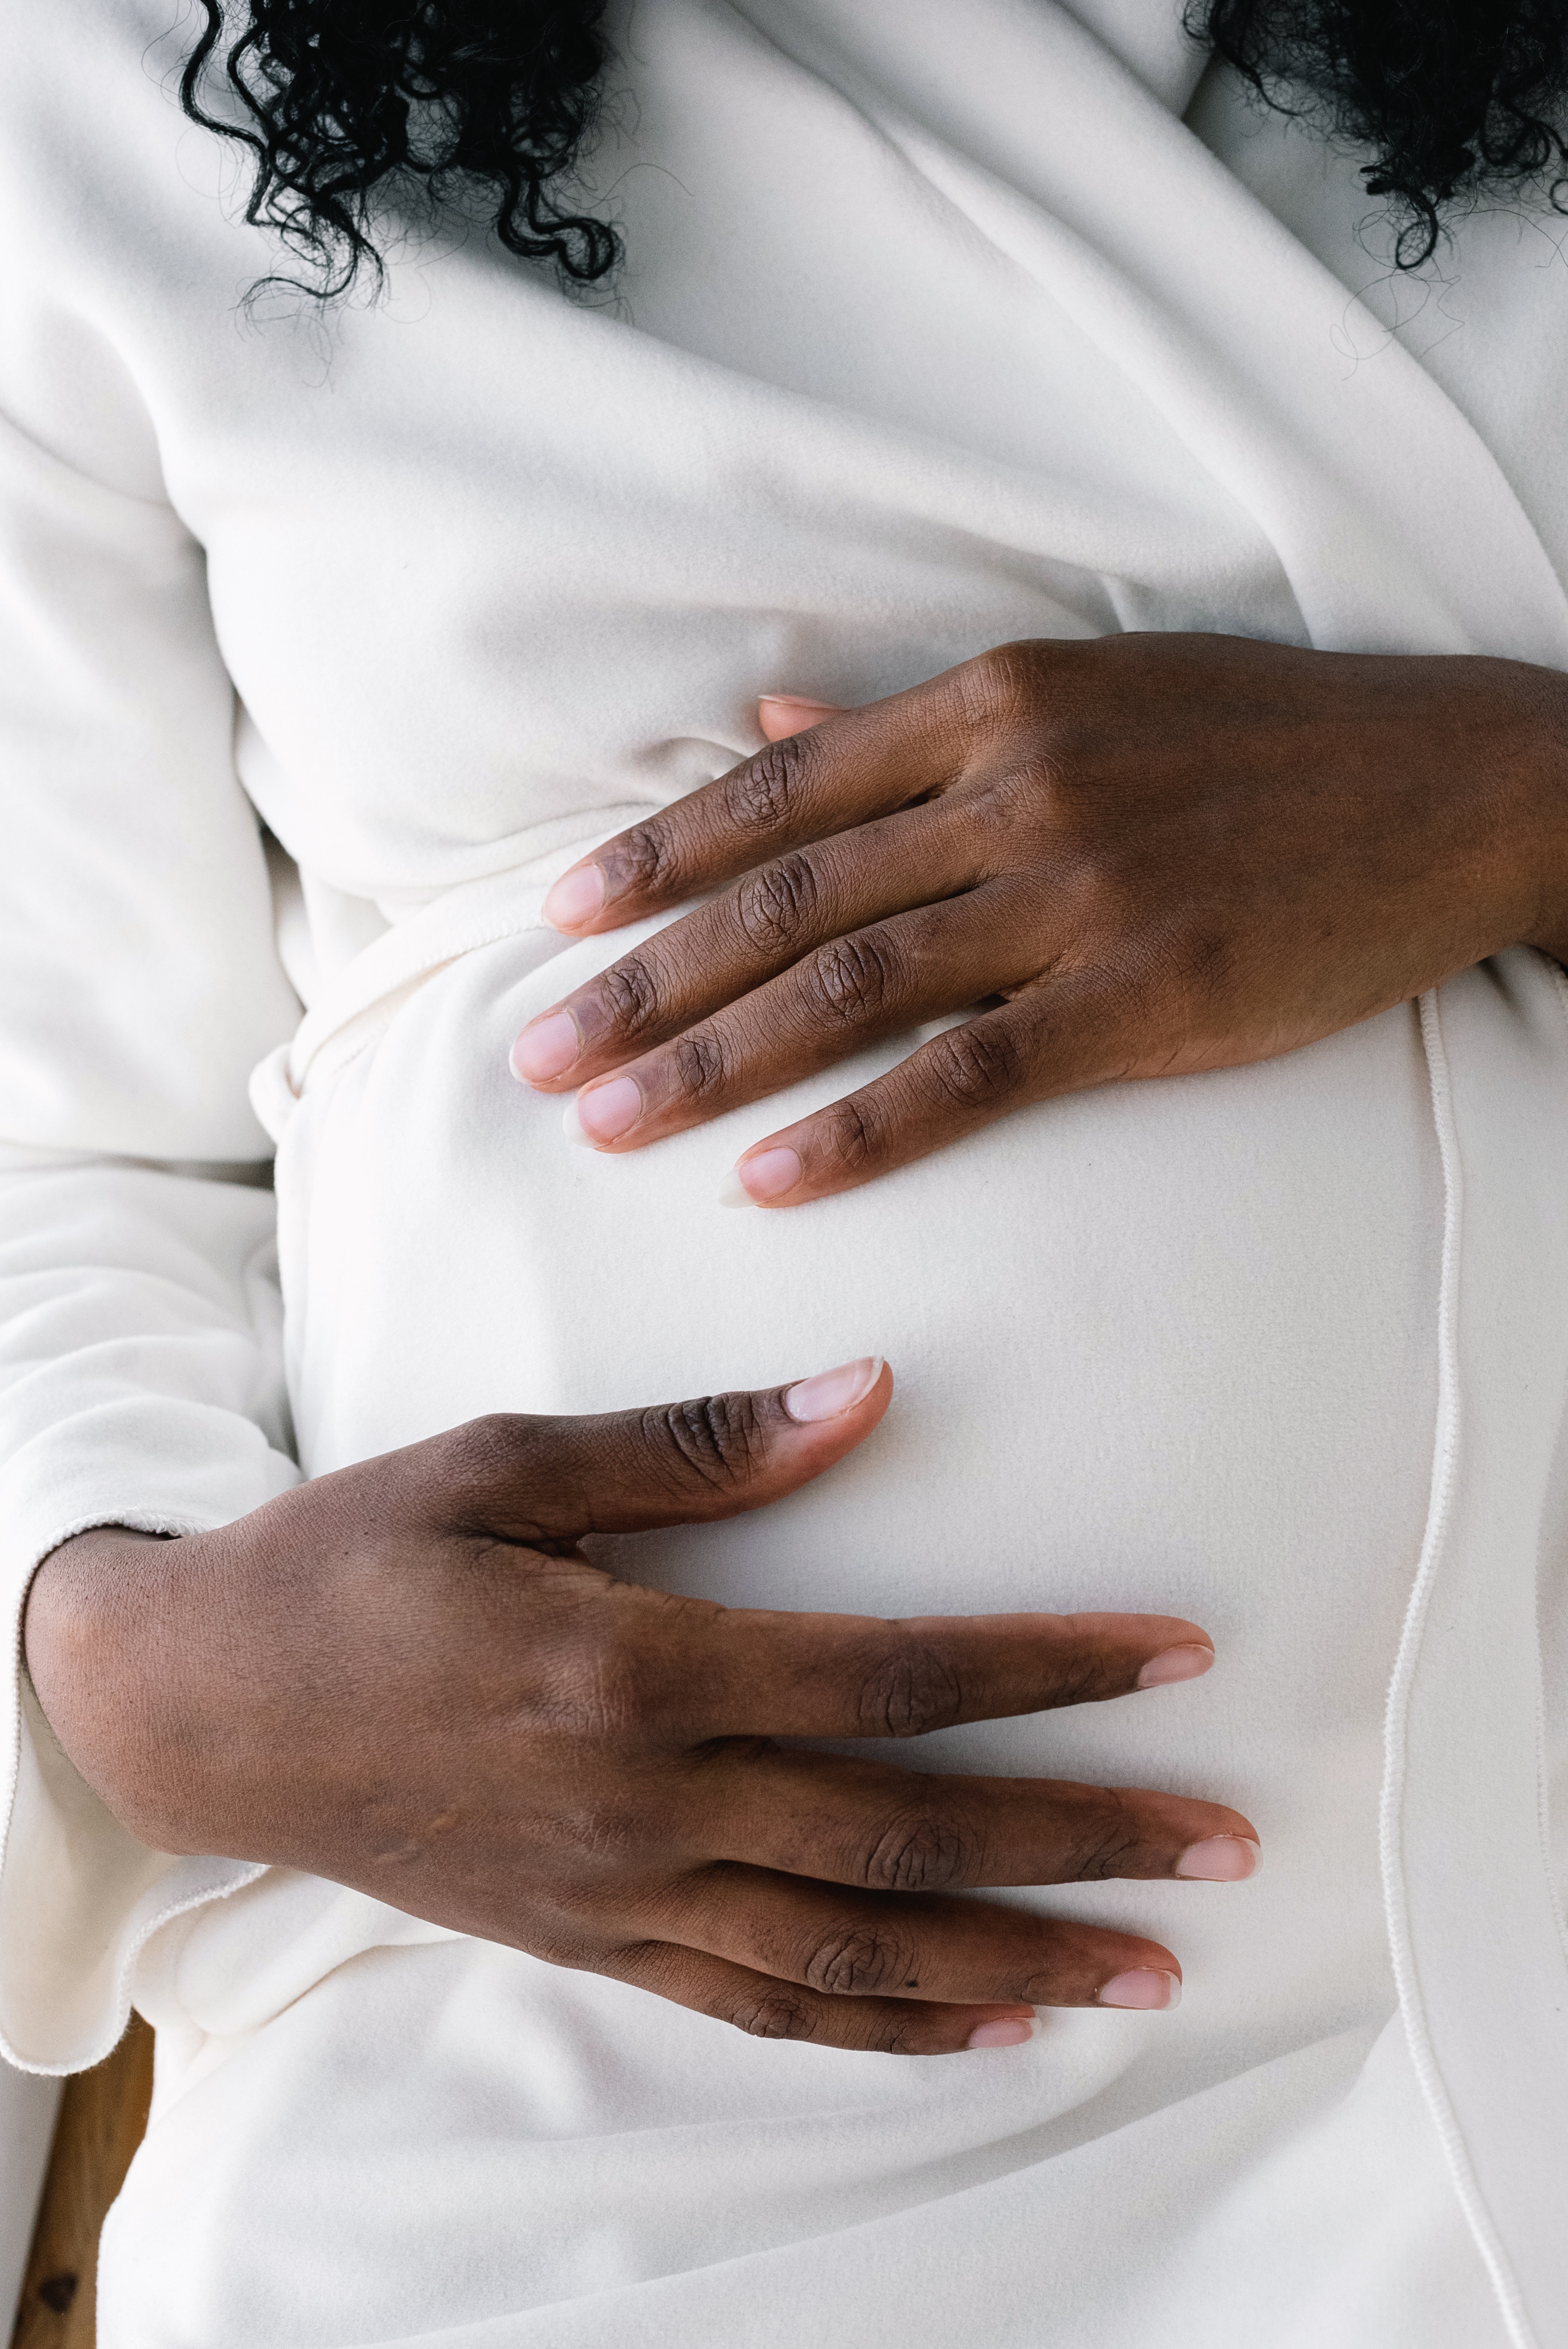 Black Maternal Mortality Still On The Rise